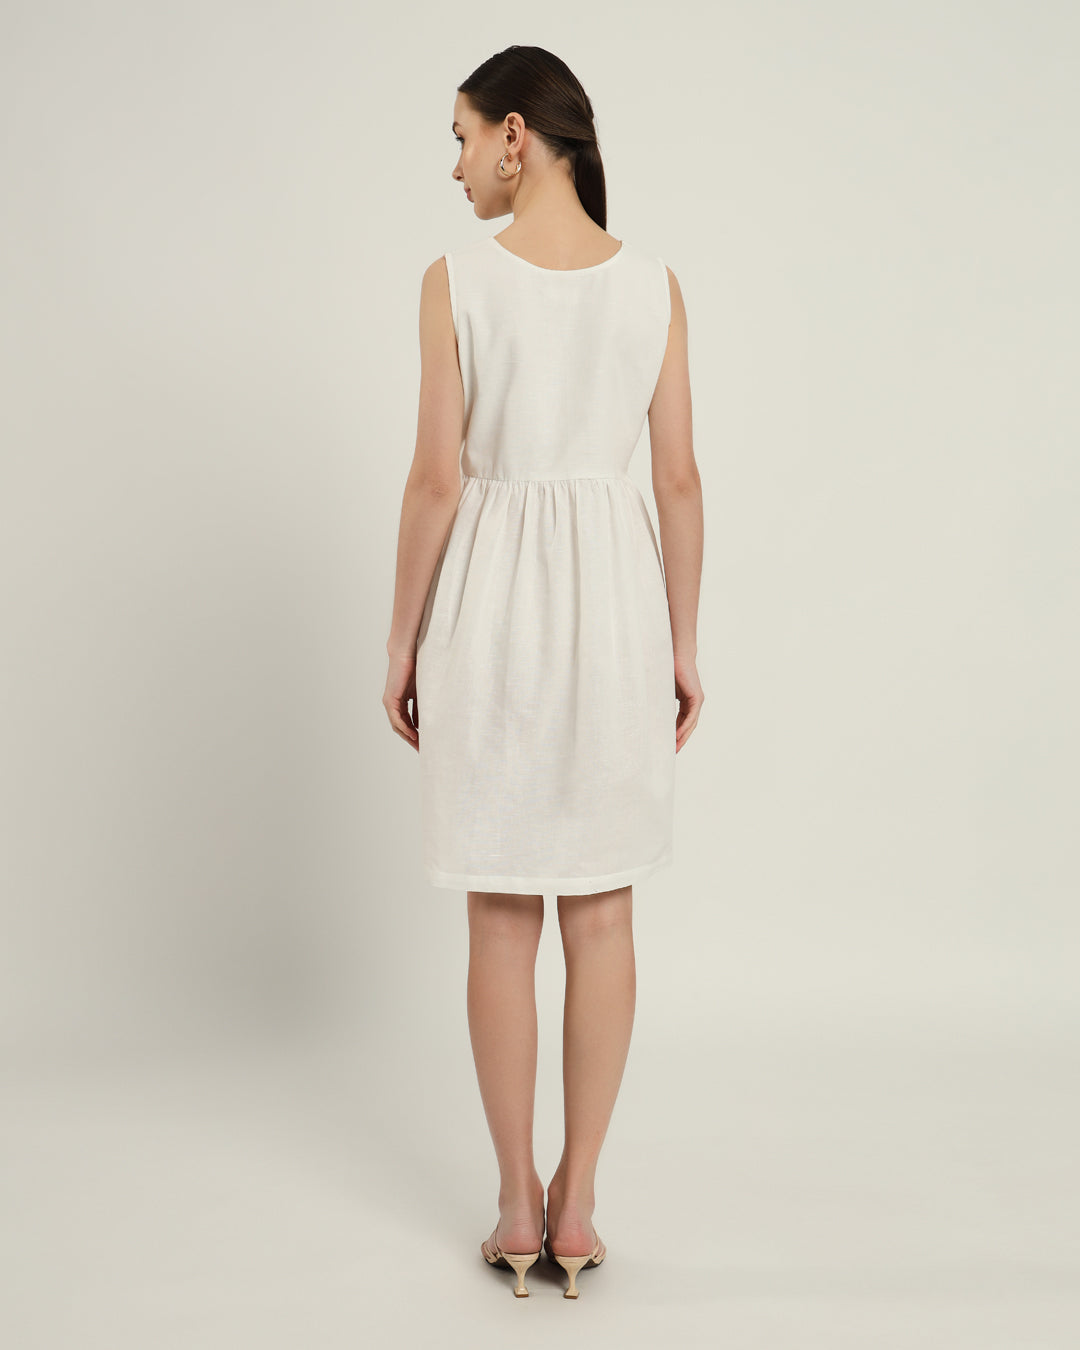 The Chania Daisy White Linen Dress